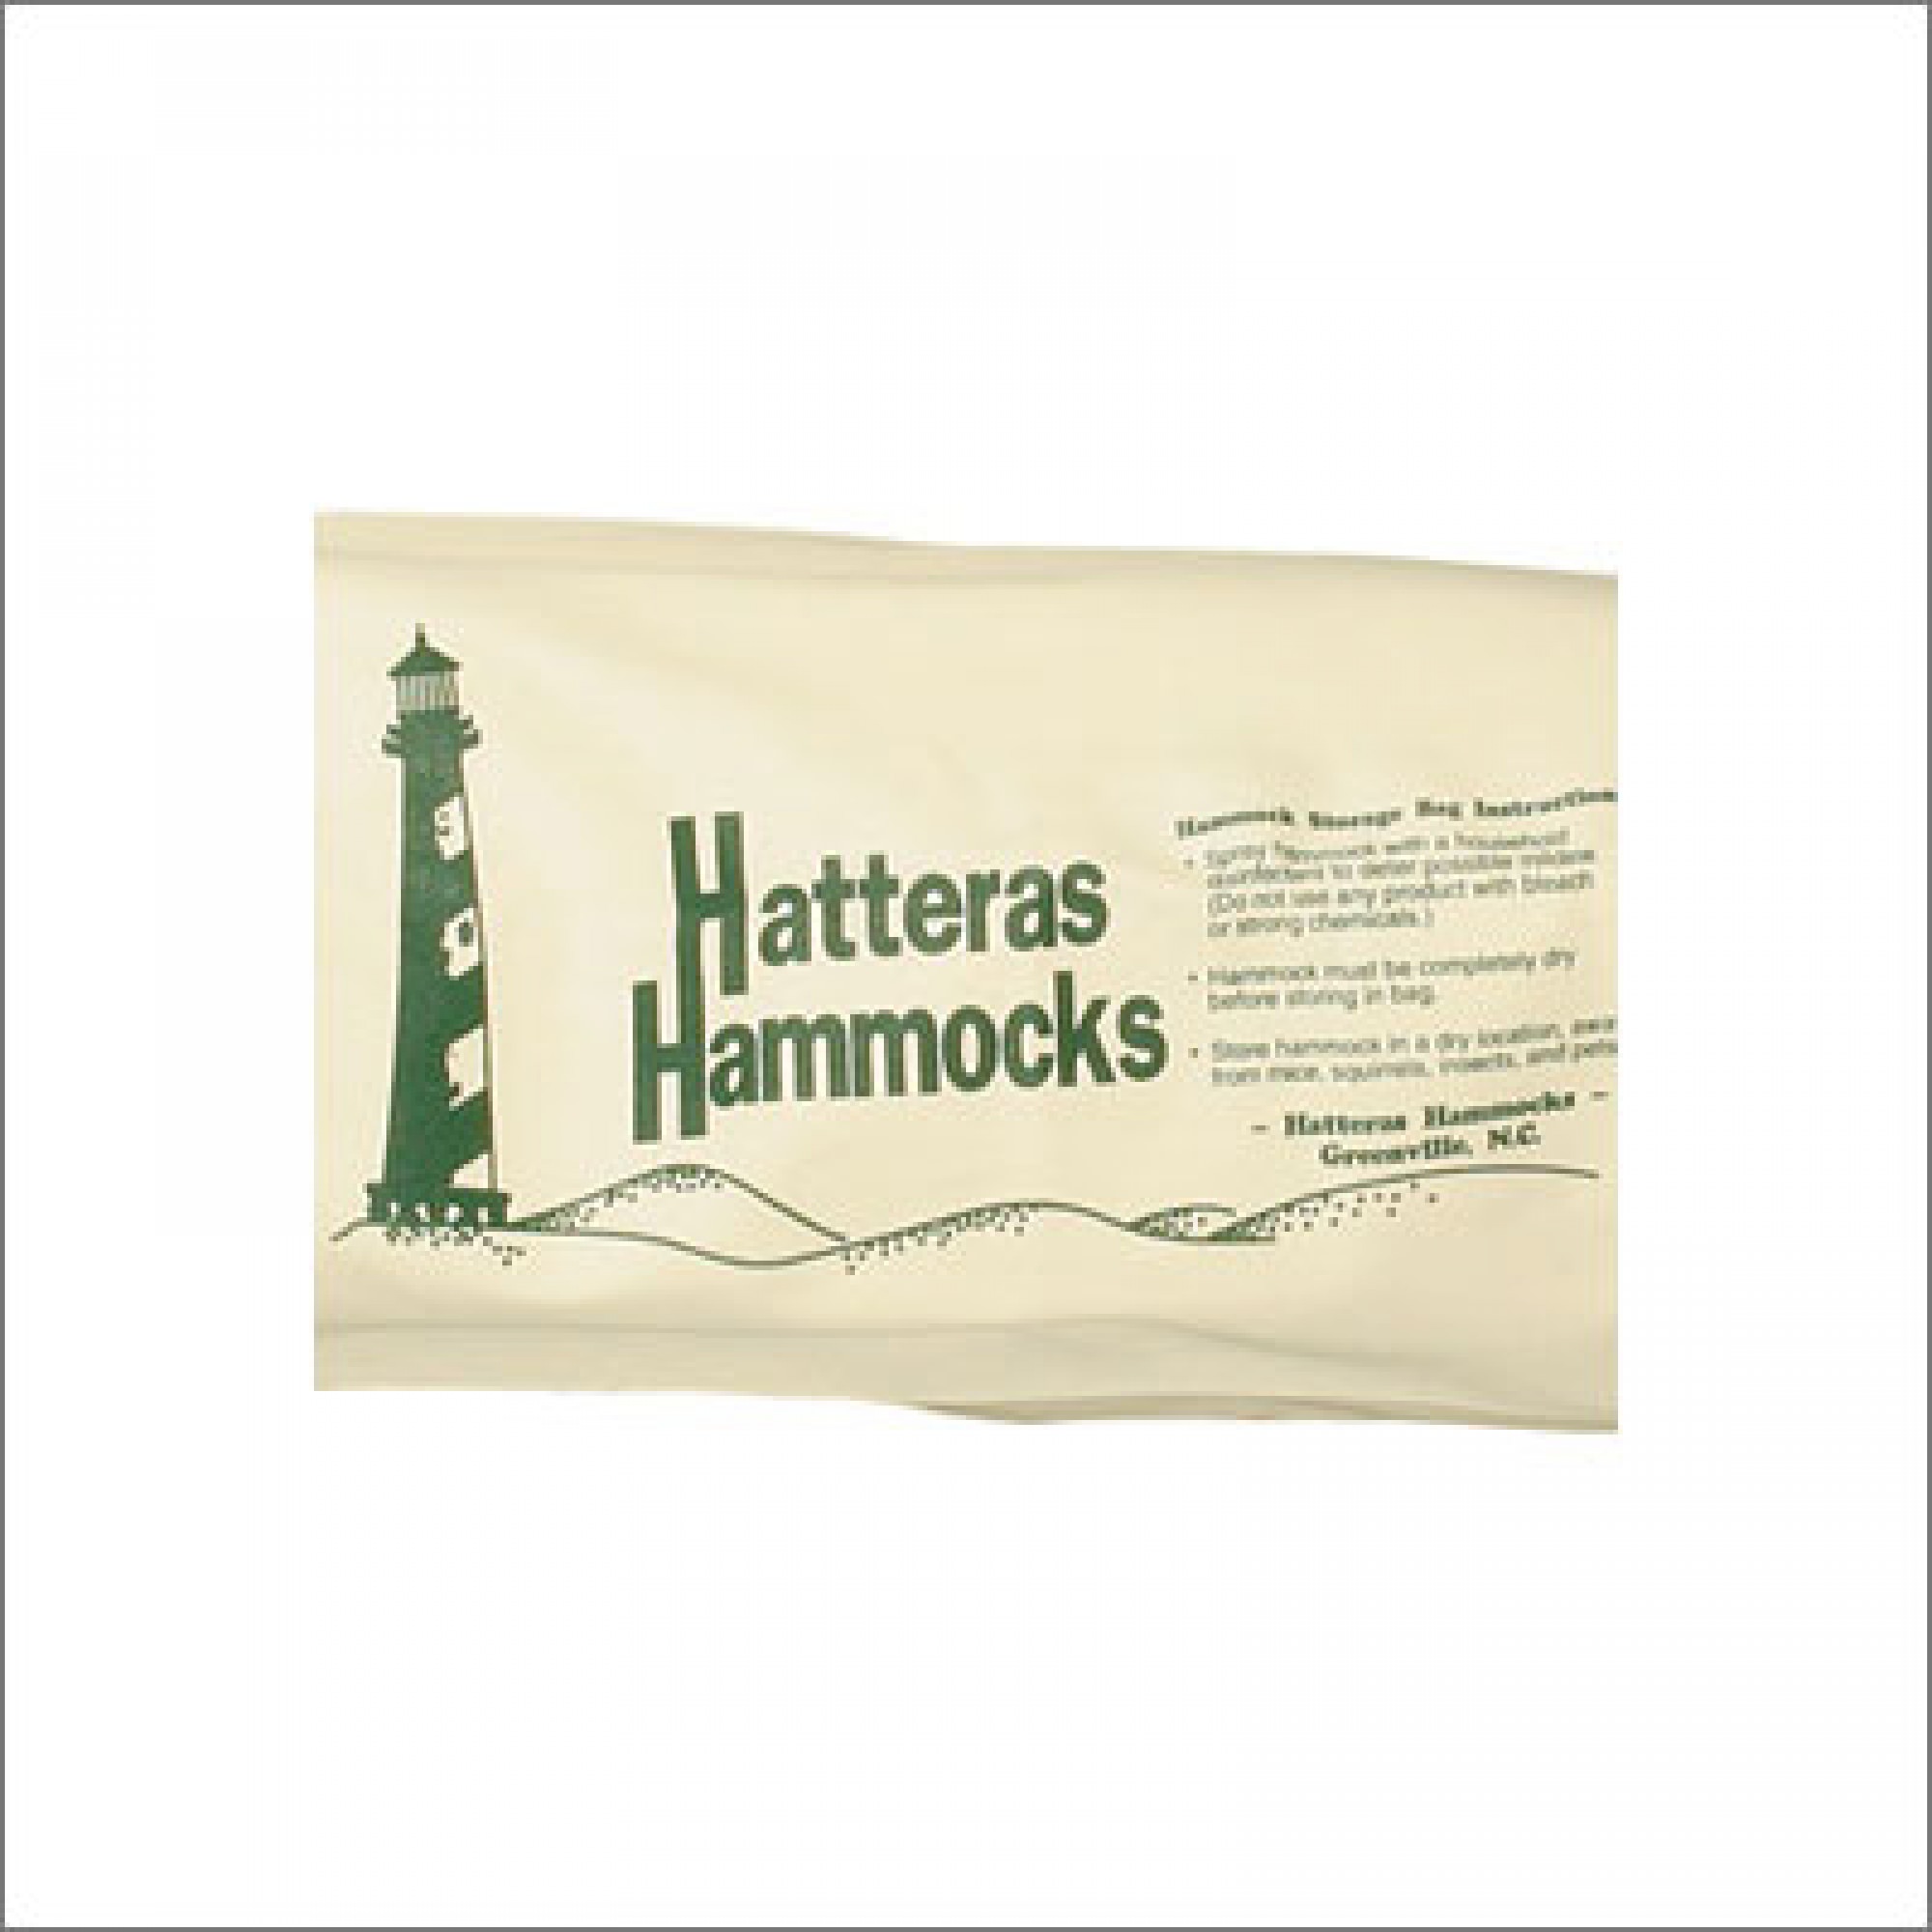 Welcome to Hatteras Hammocks